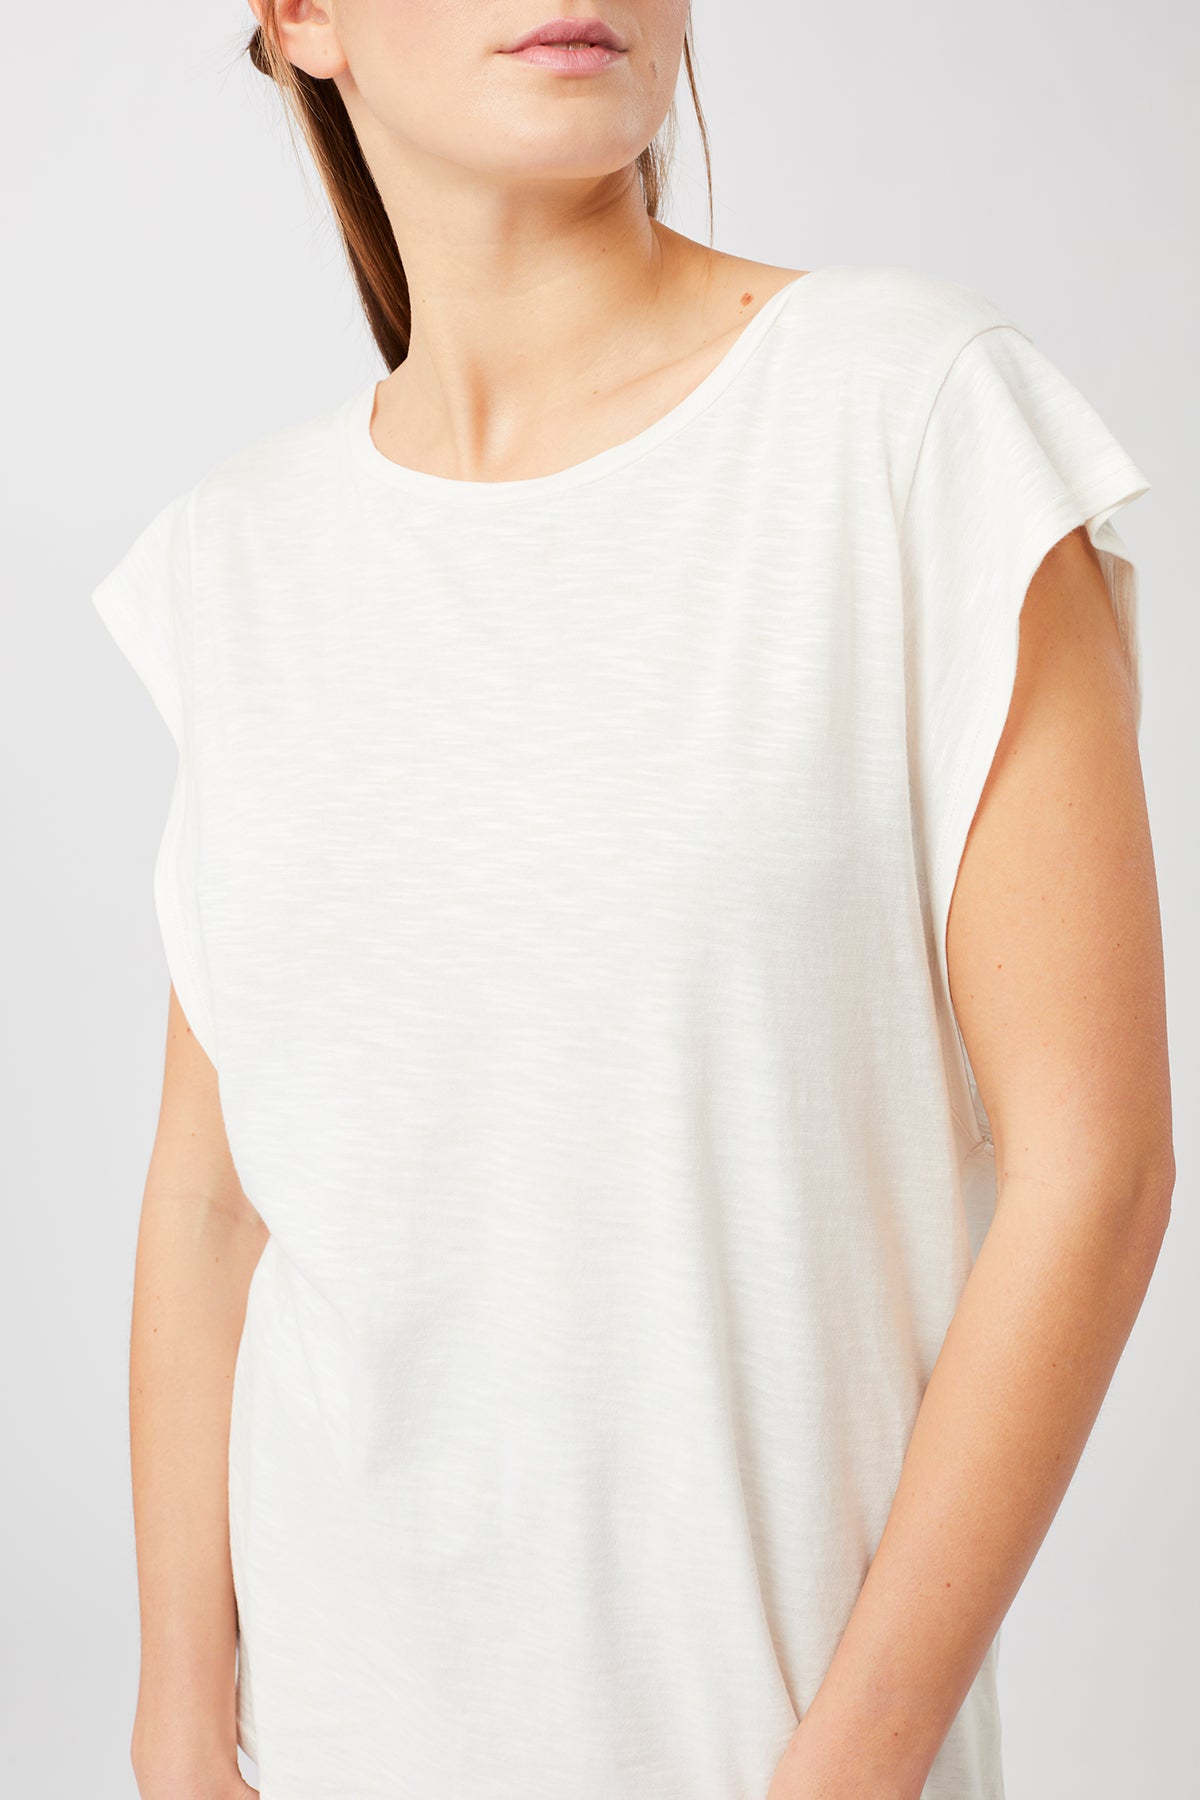  Mandala Yoga Shirt Weiß Detail - Off Duty Top